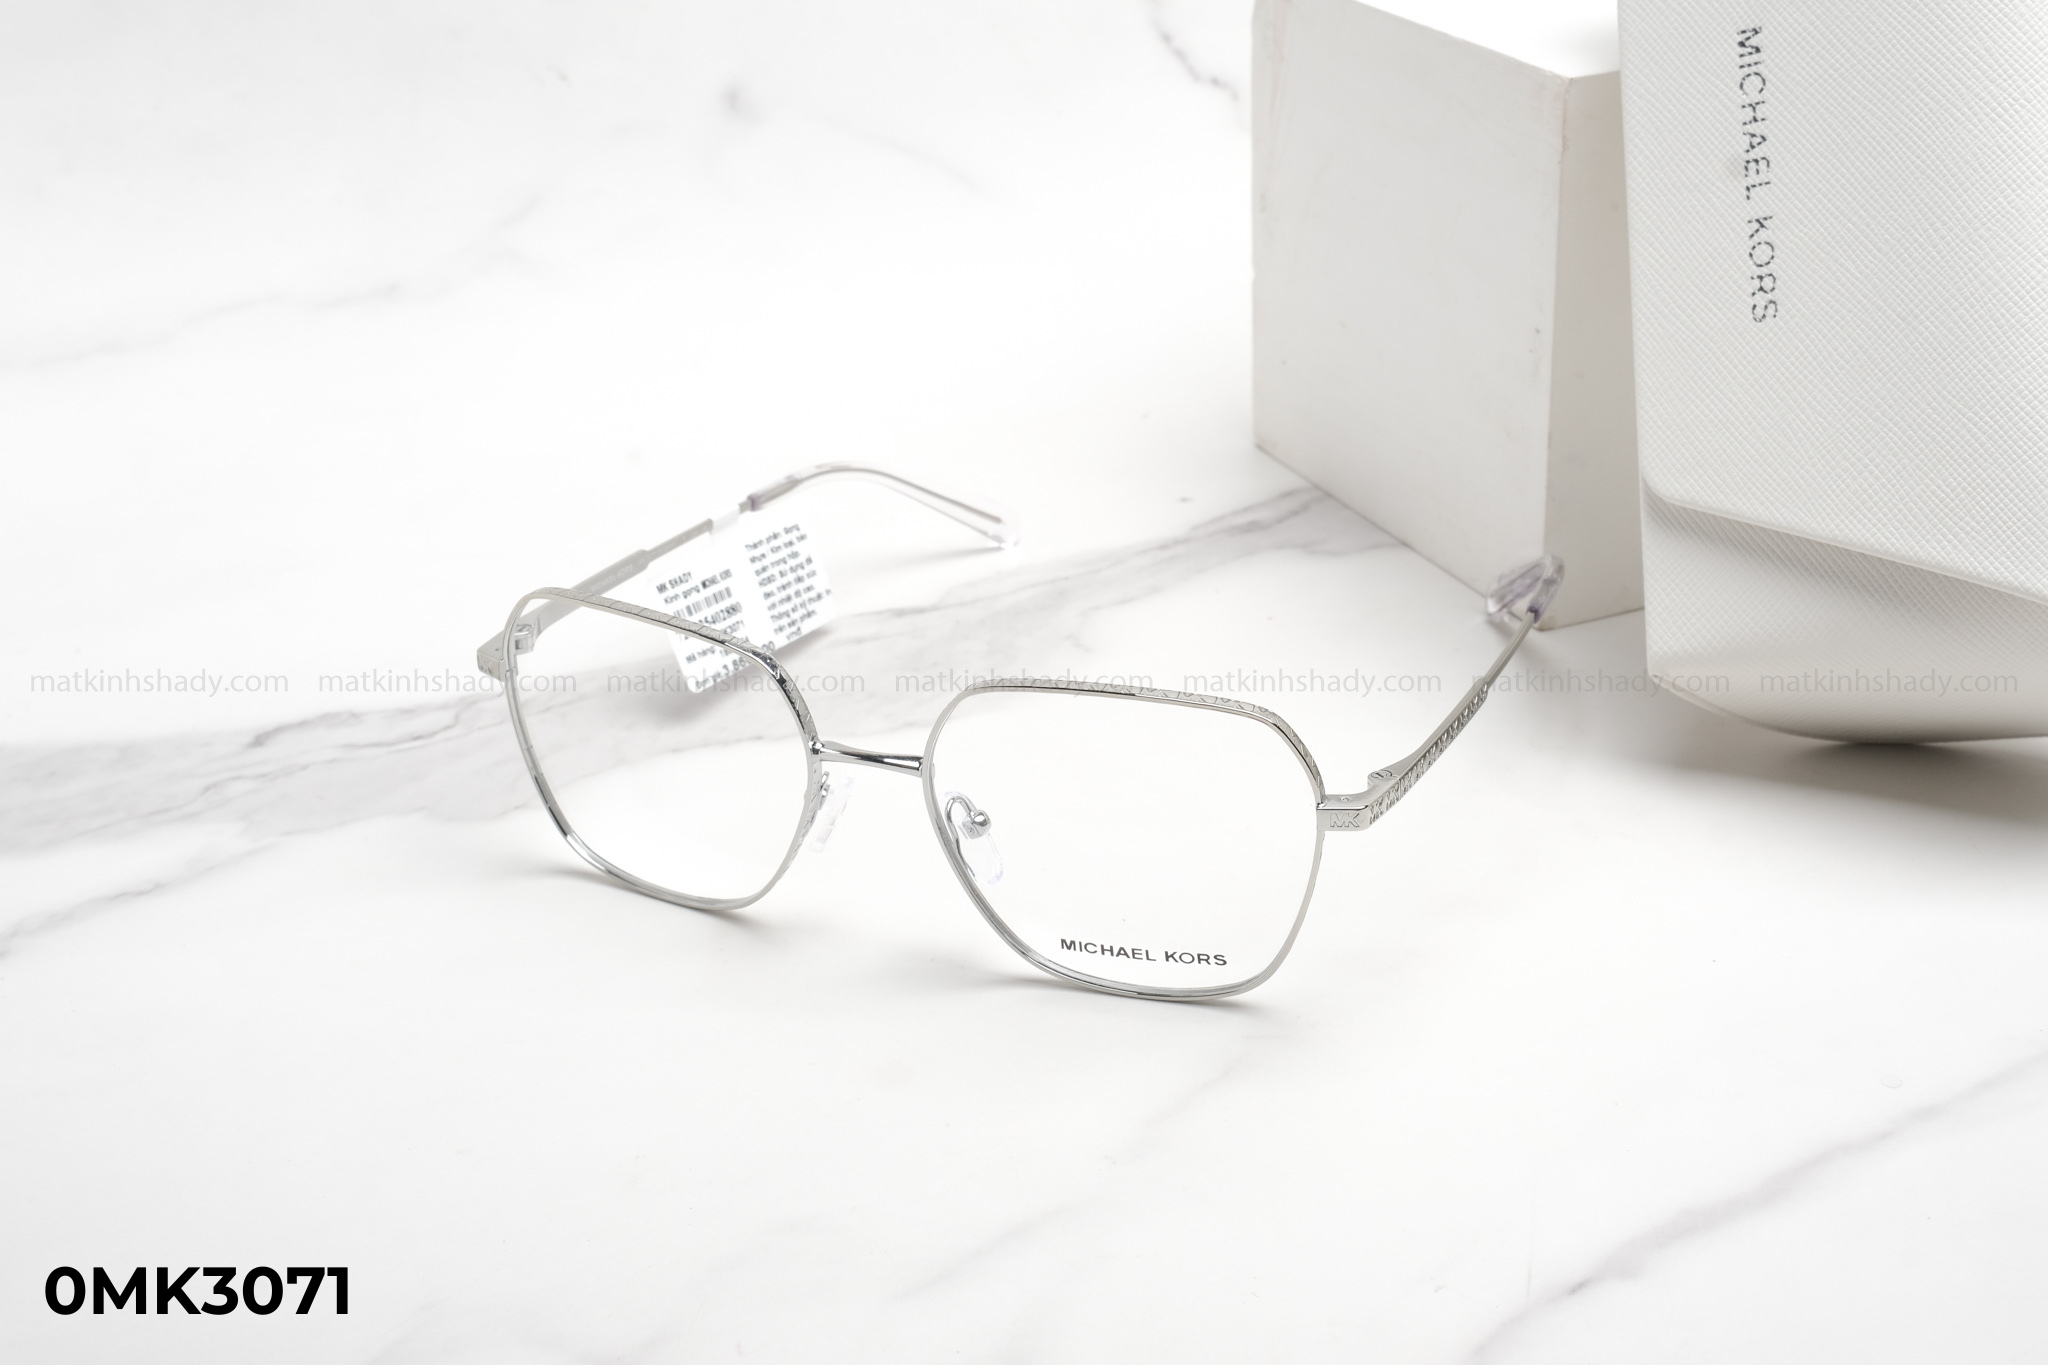  Michael Kors Eyewear - Glasses - 0MK3071 